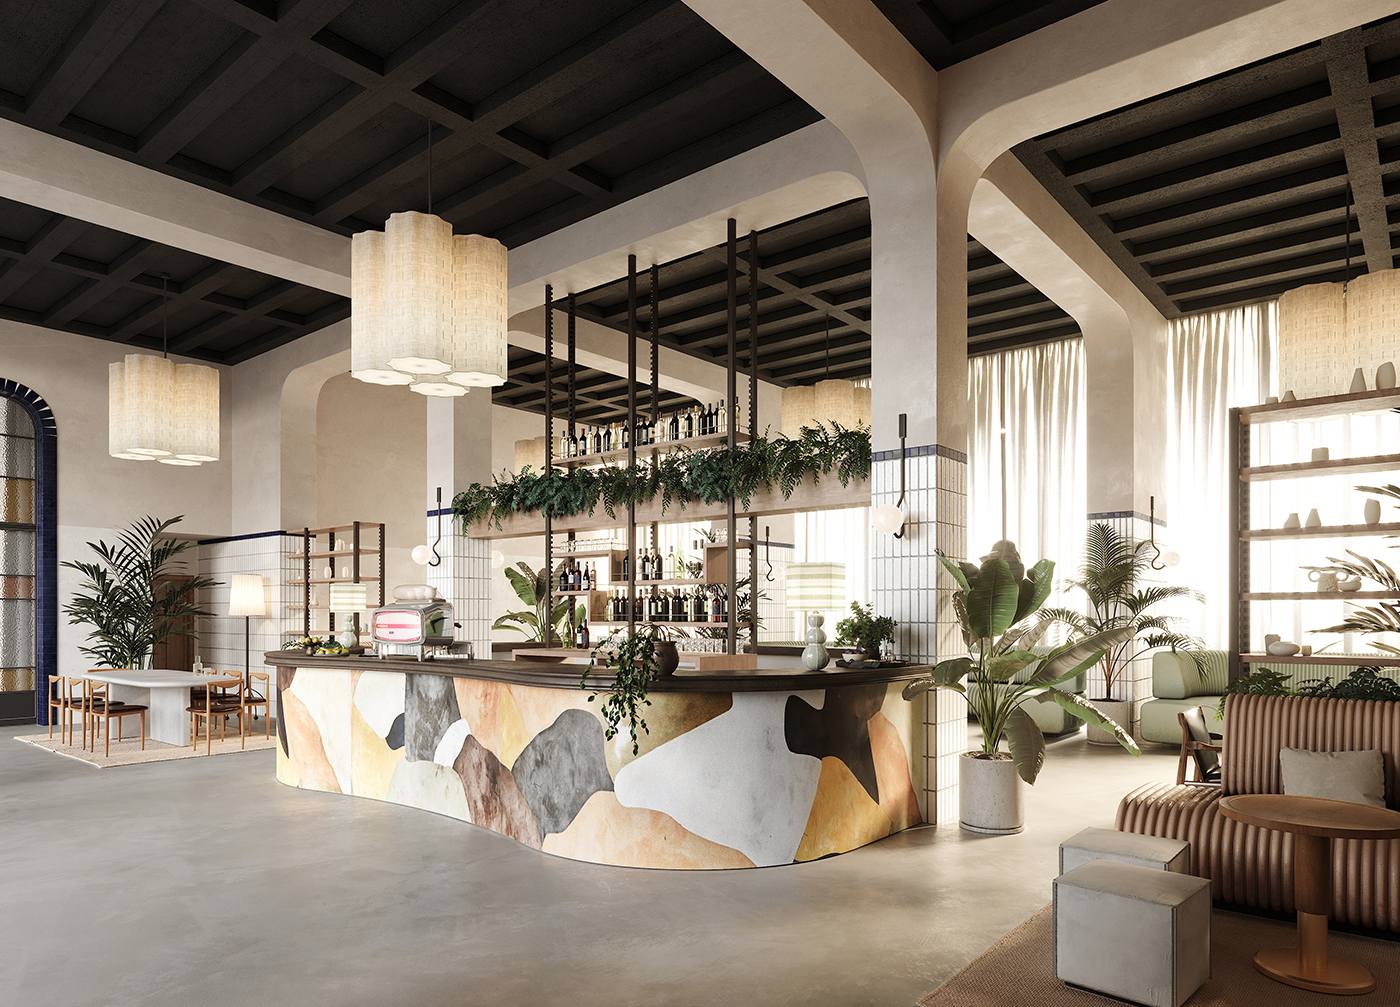 Interior Design Hotel - The Hoxton Open House. Glories Barcelona